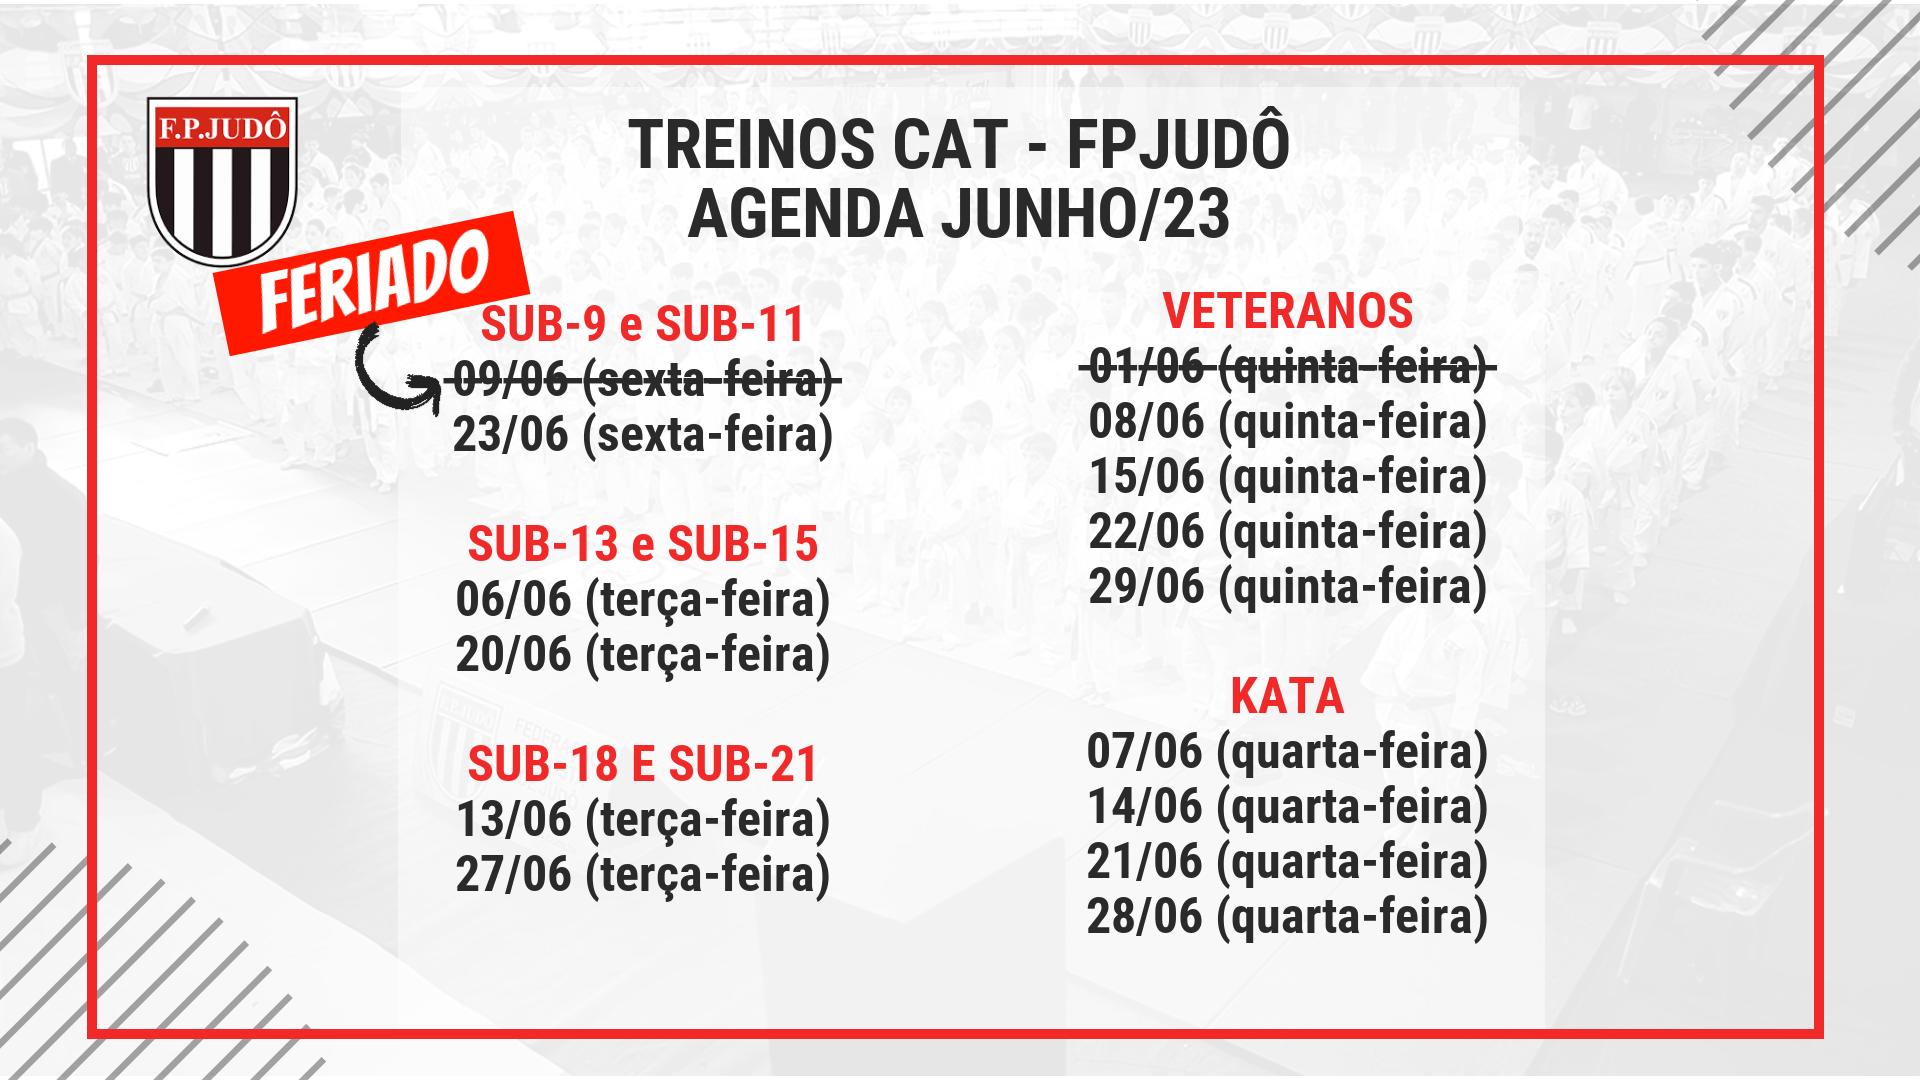 2023-06-05 - Informativo Treino CAT (wide)